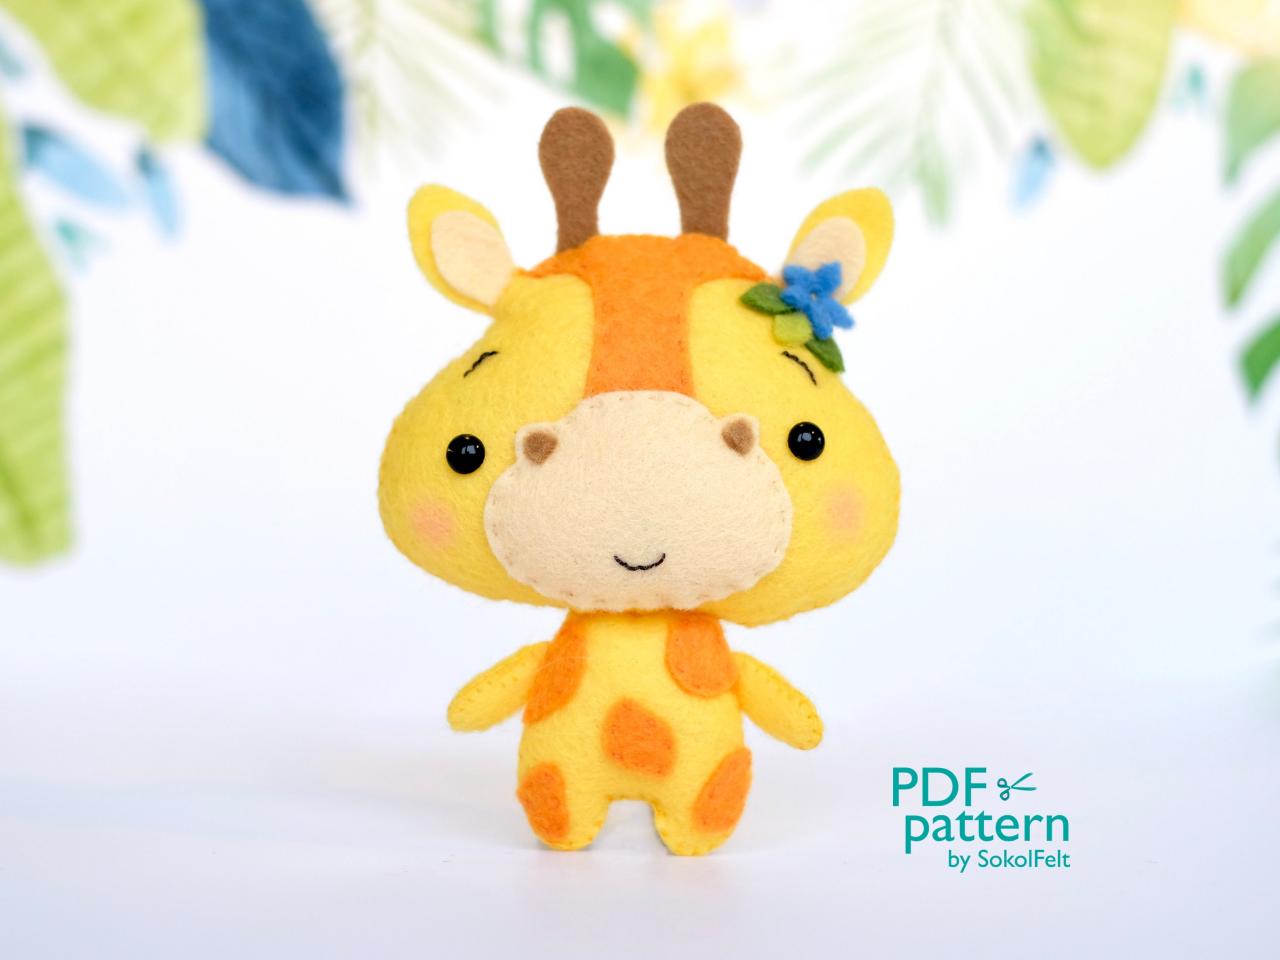 Giraffe Pdf Pattern, Jungle Safari Baby Animal Toy Sewing Tutorial, African Wild Animal, Felt Baby Crib Mobile Toy